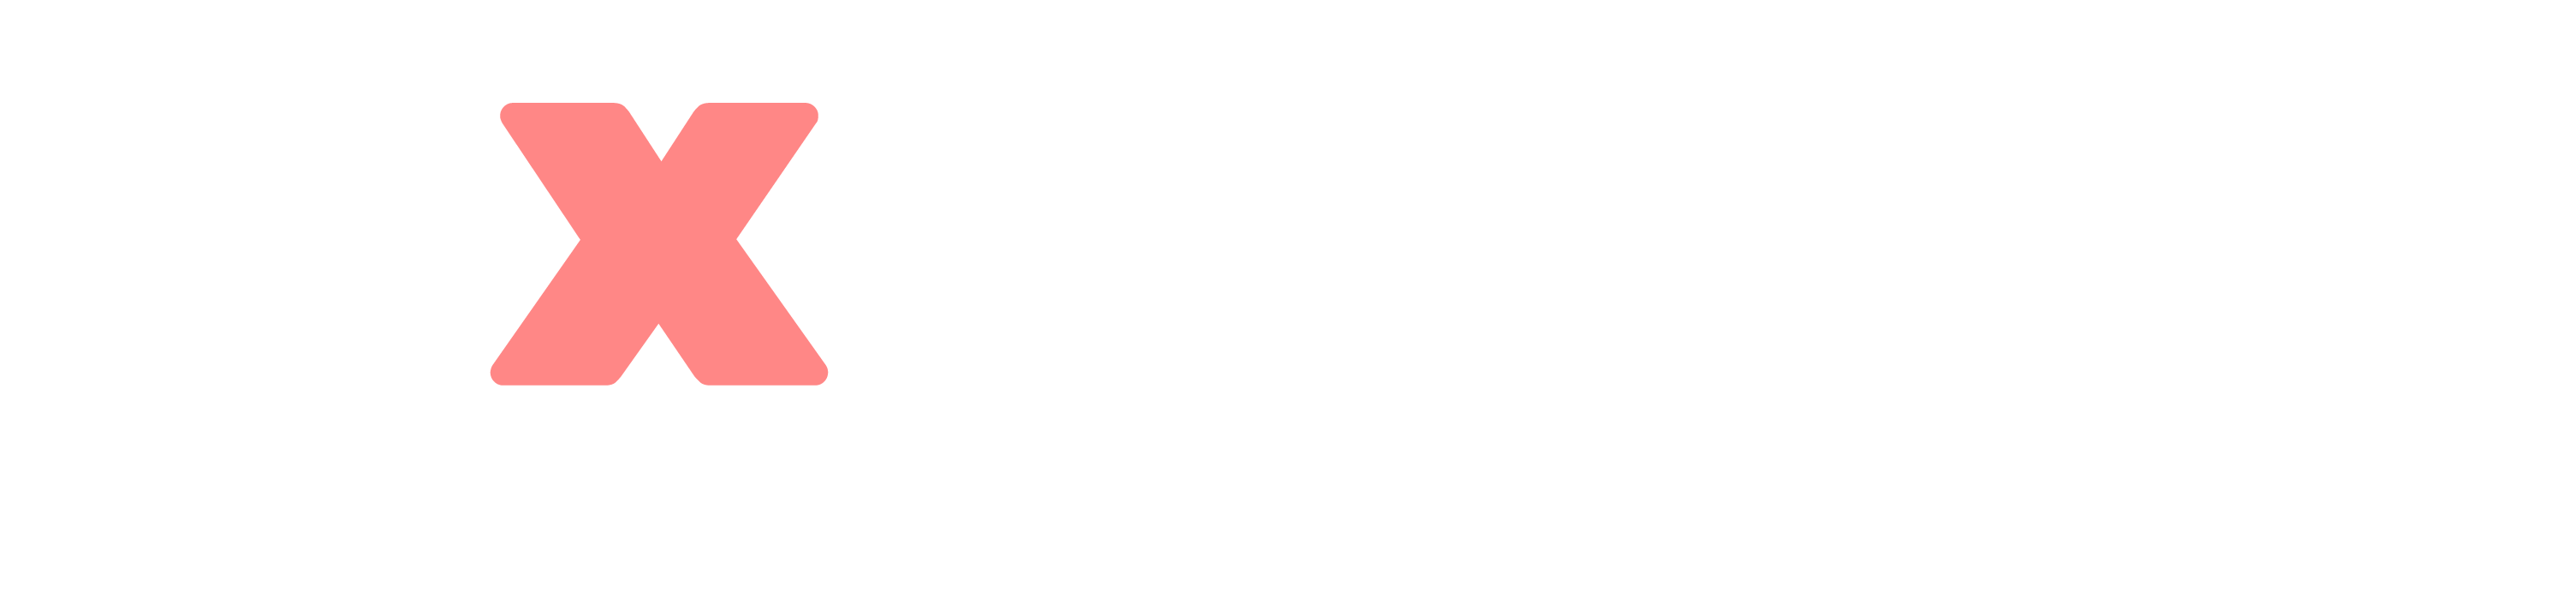 :pxtra pachex + Co-Brand Logo